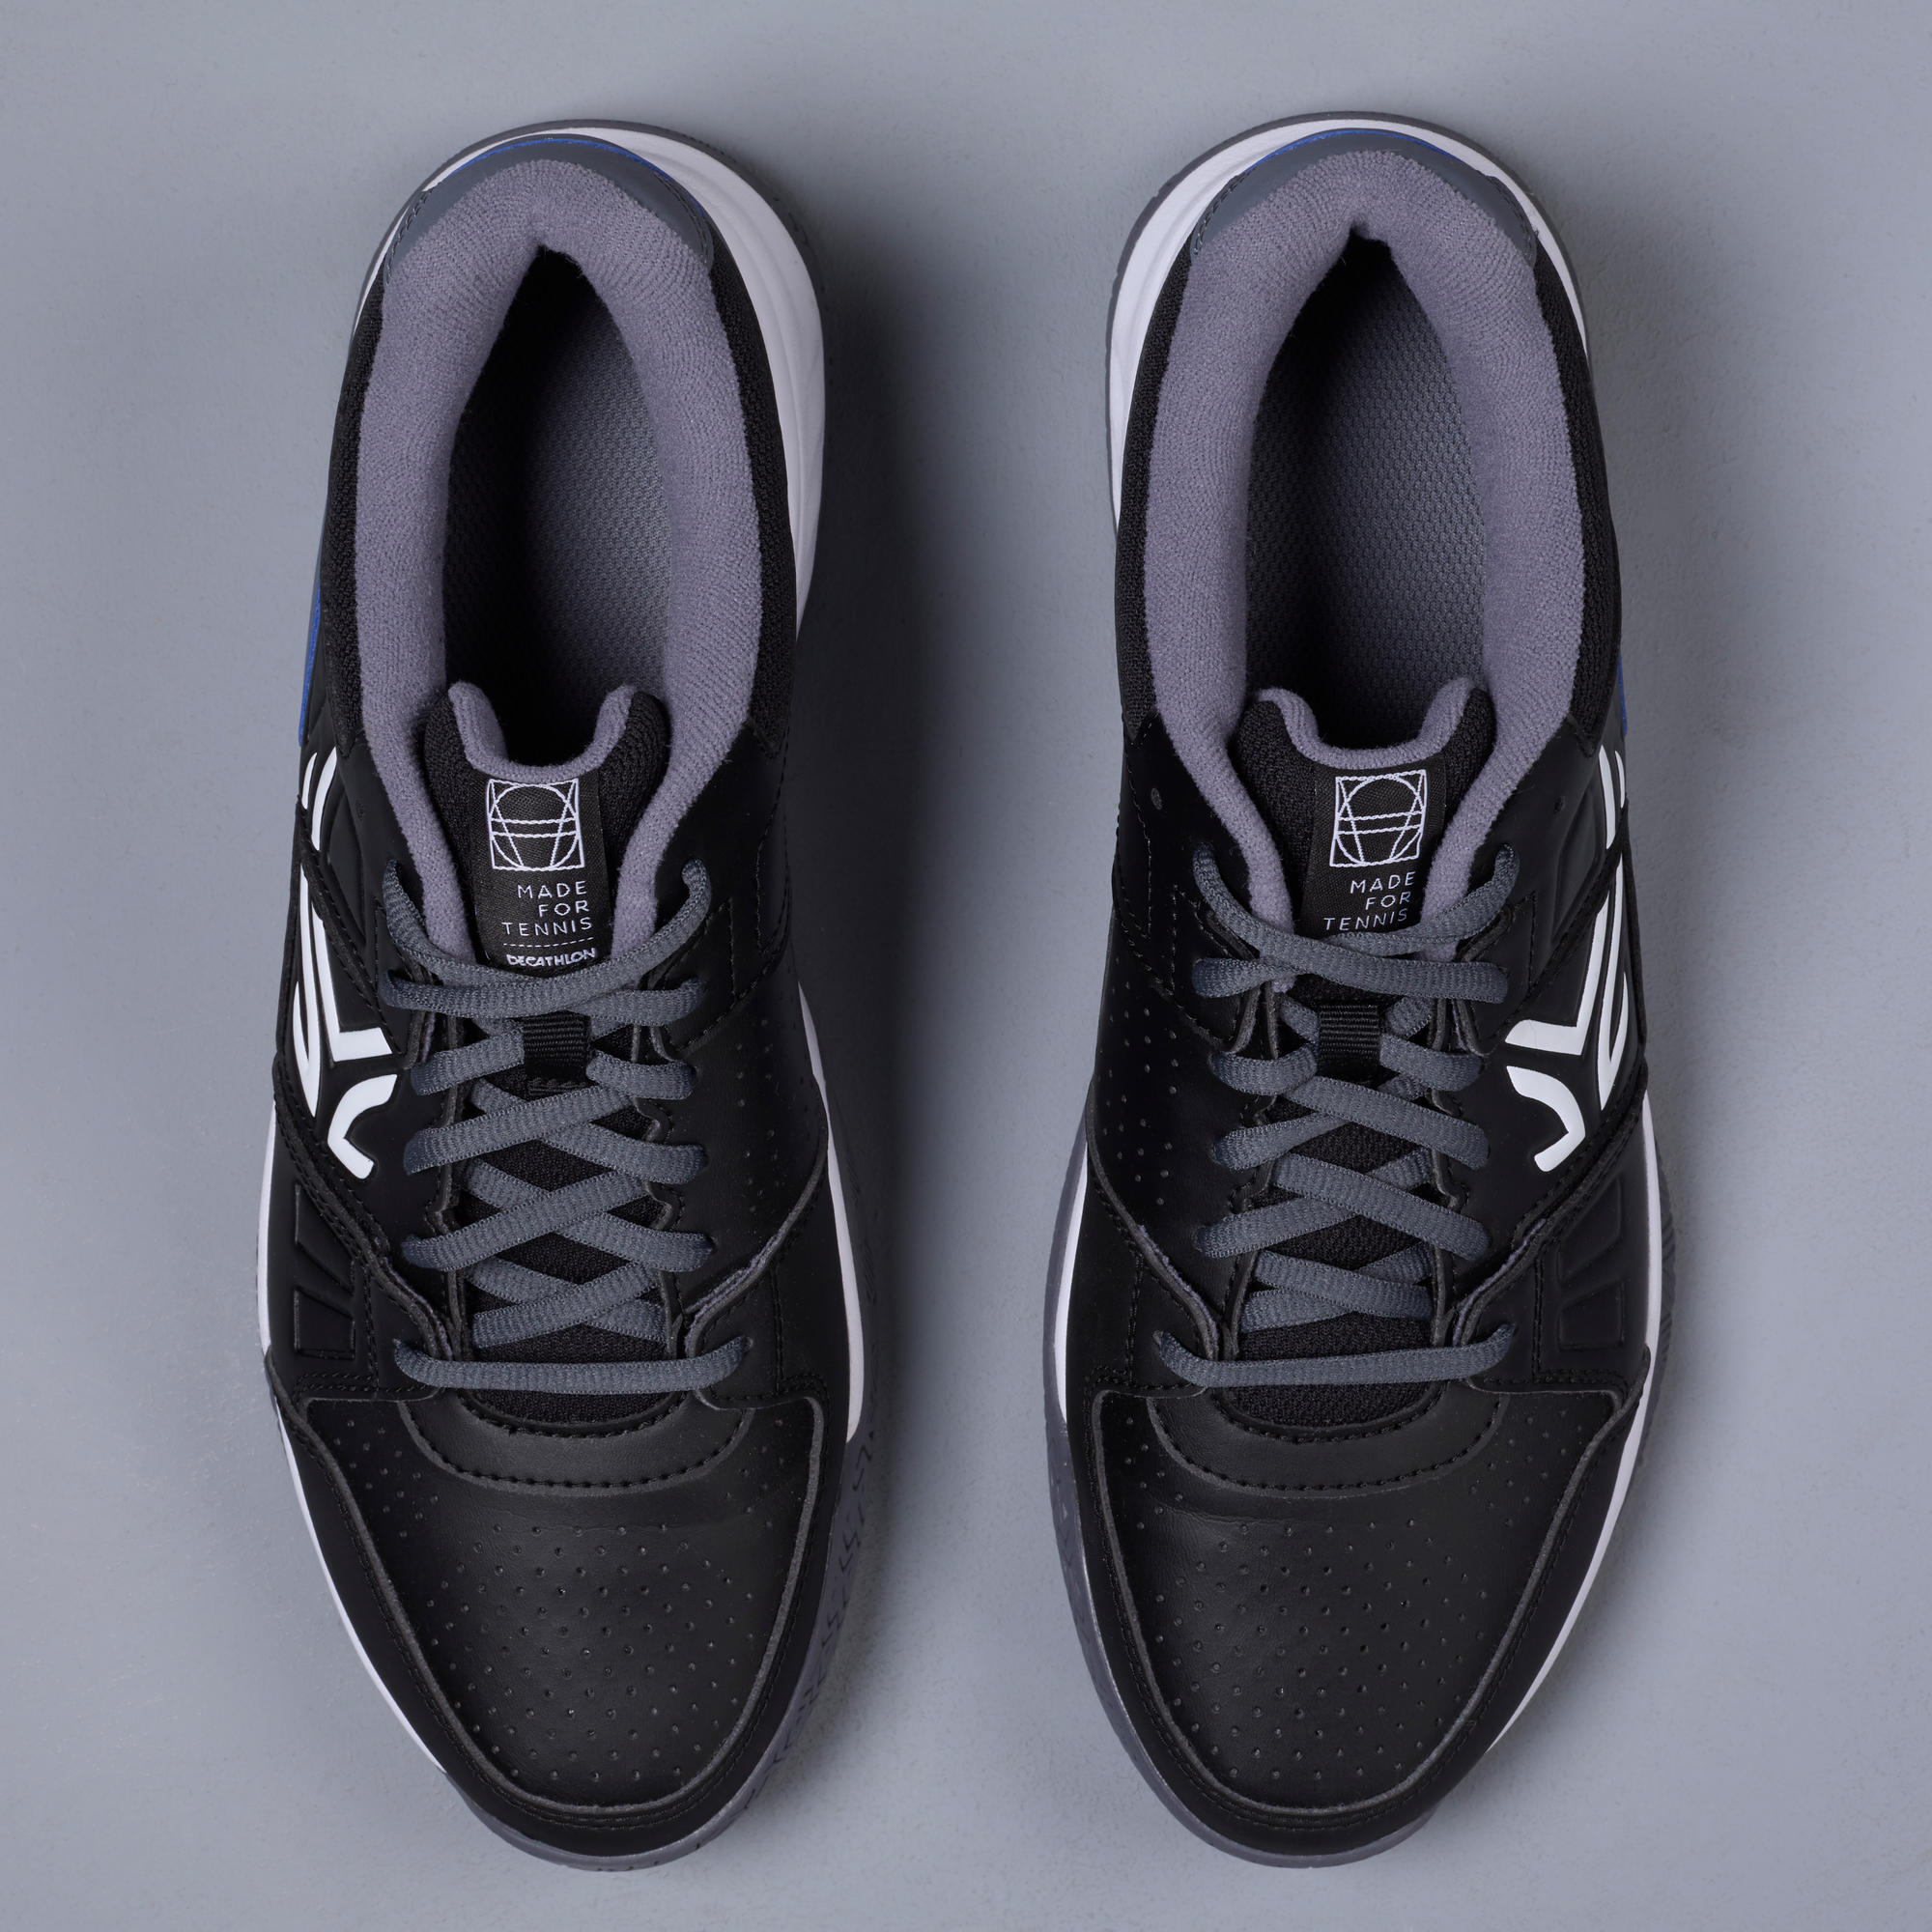 TS160 Multi-Court Tennis Shoes - Black 4/7